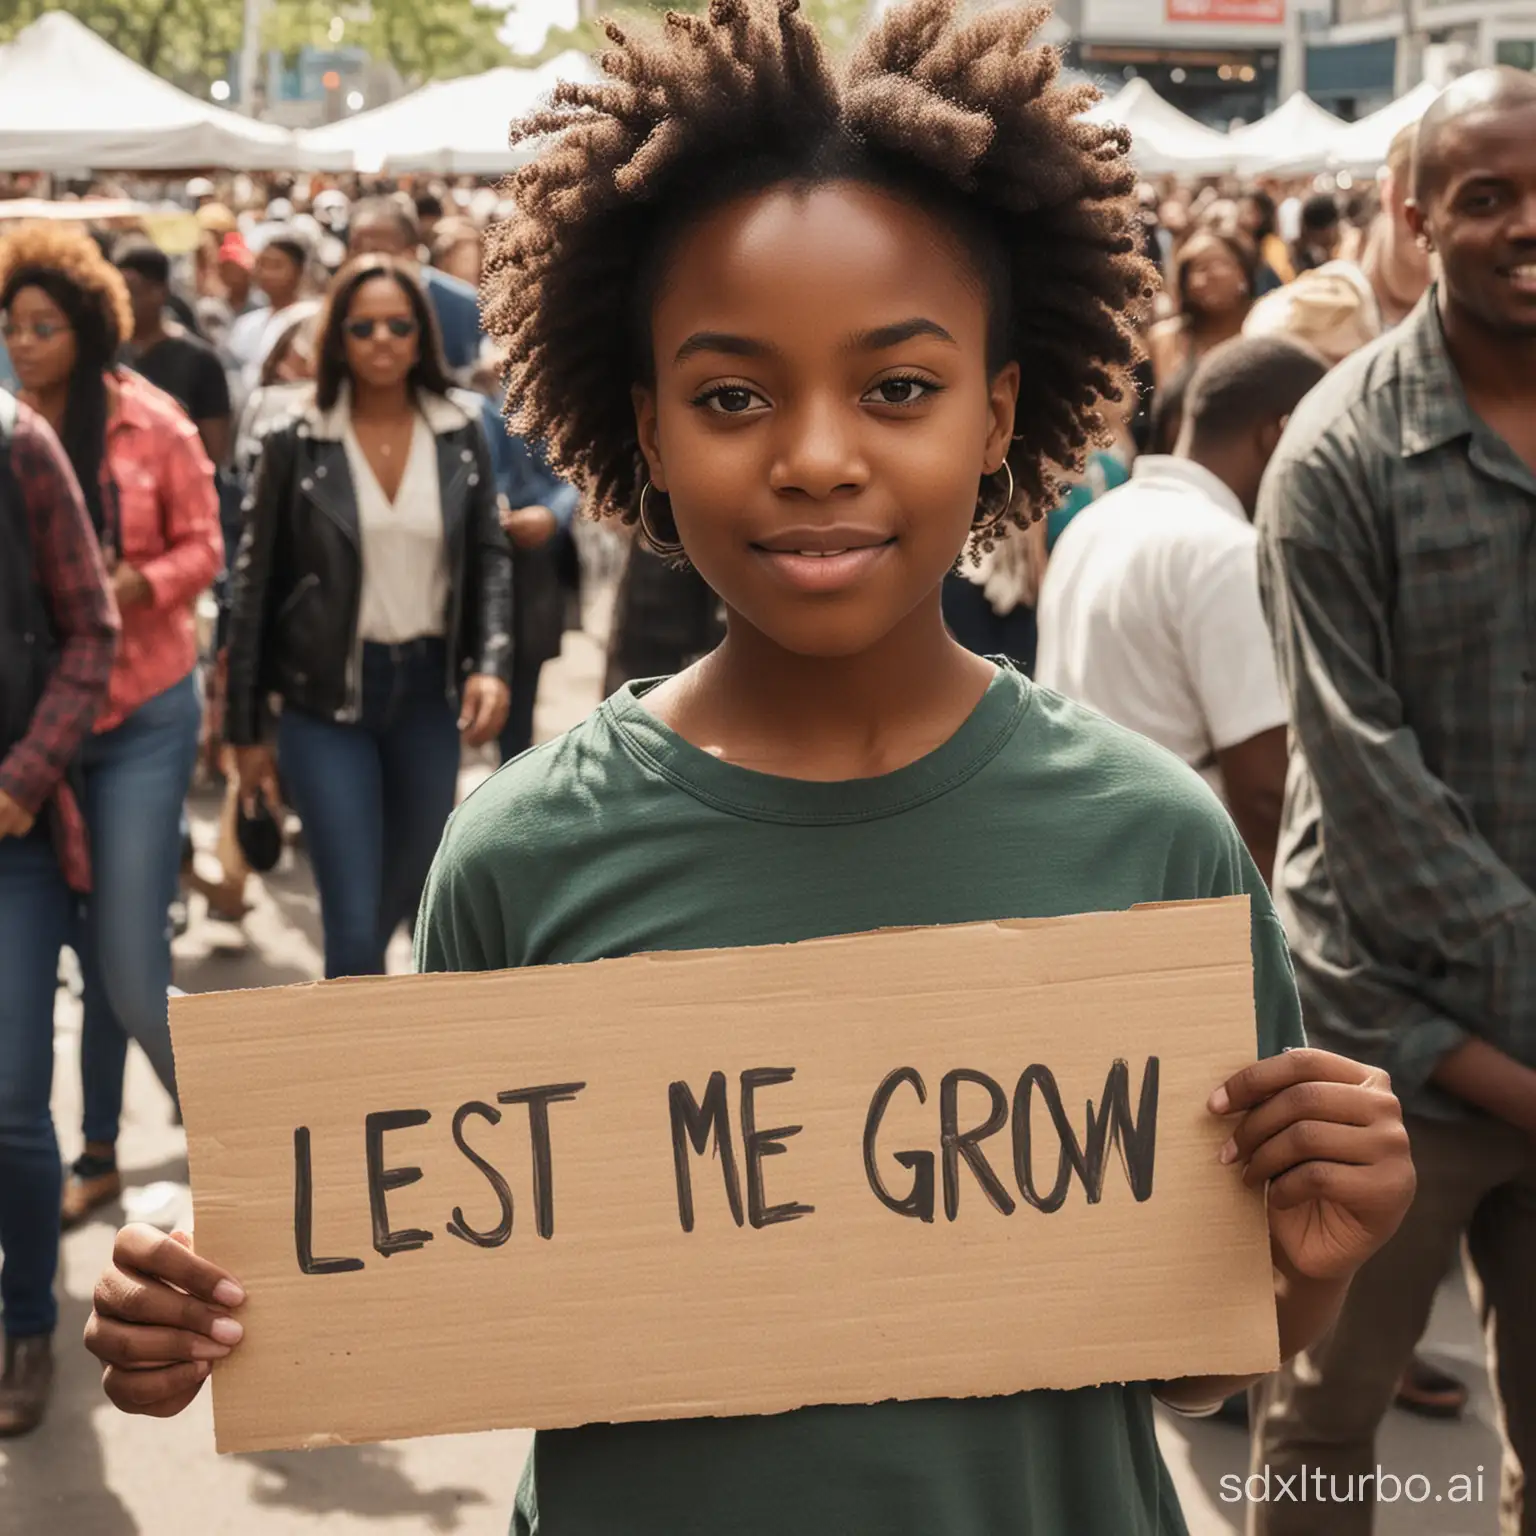 Empowering-Black-Girl-Holding-Let-Me-Grow-Sign-in-Bustling-Market